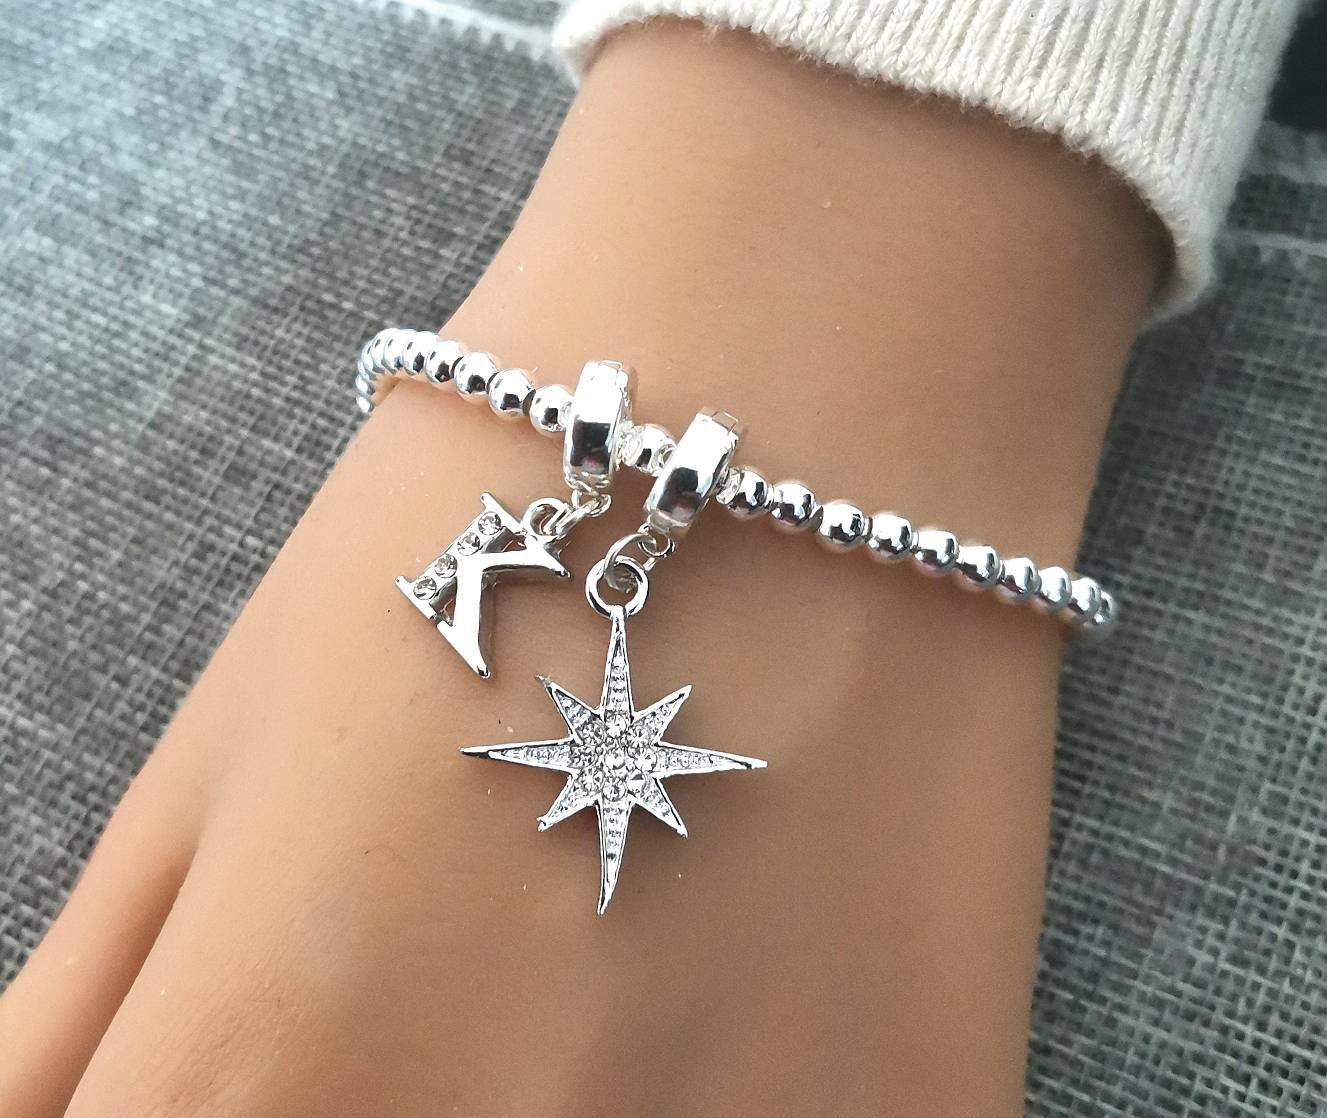 Star bracelet, star bracelet women, star bracelet for her, silver bracelet women,star charmjewelry, wish bracelet, star pendant,personalised